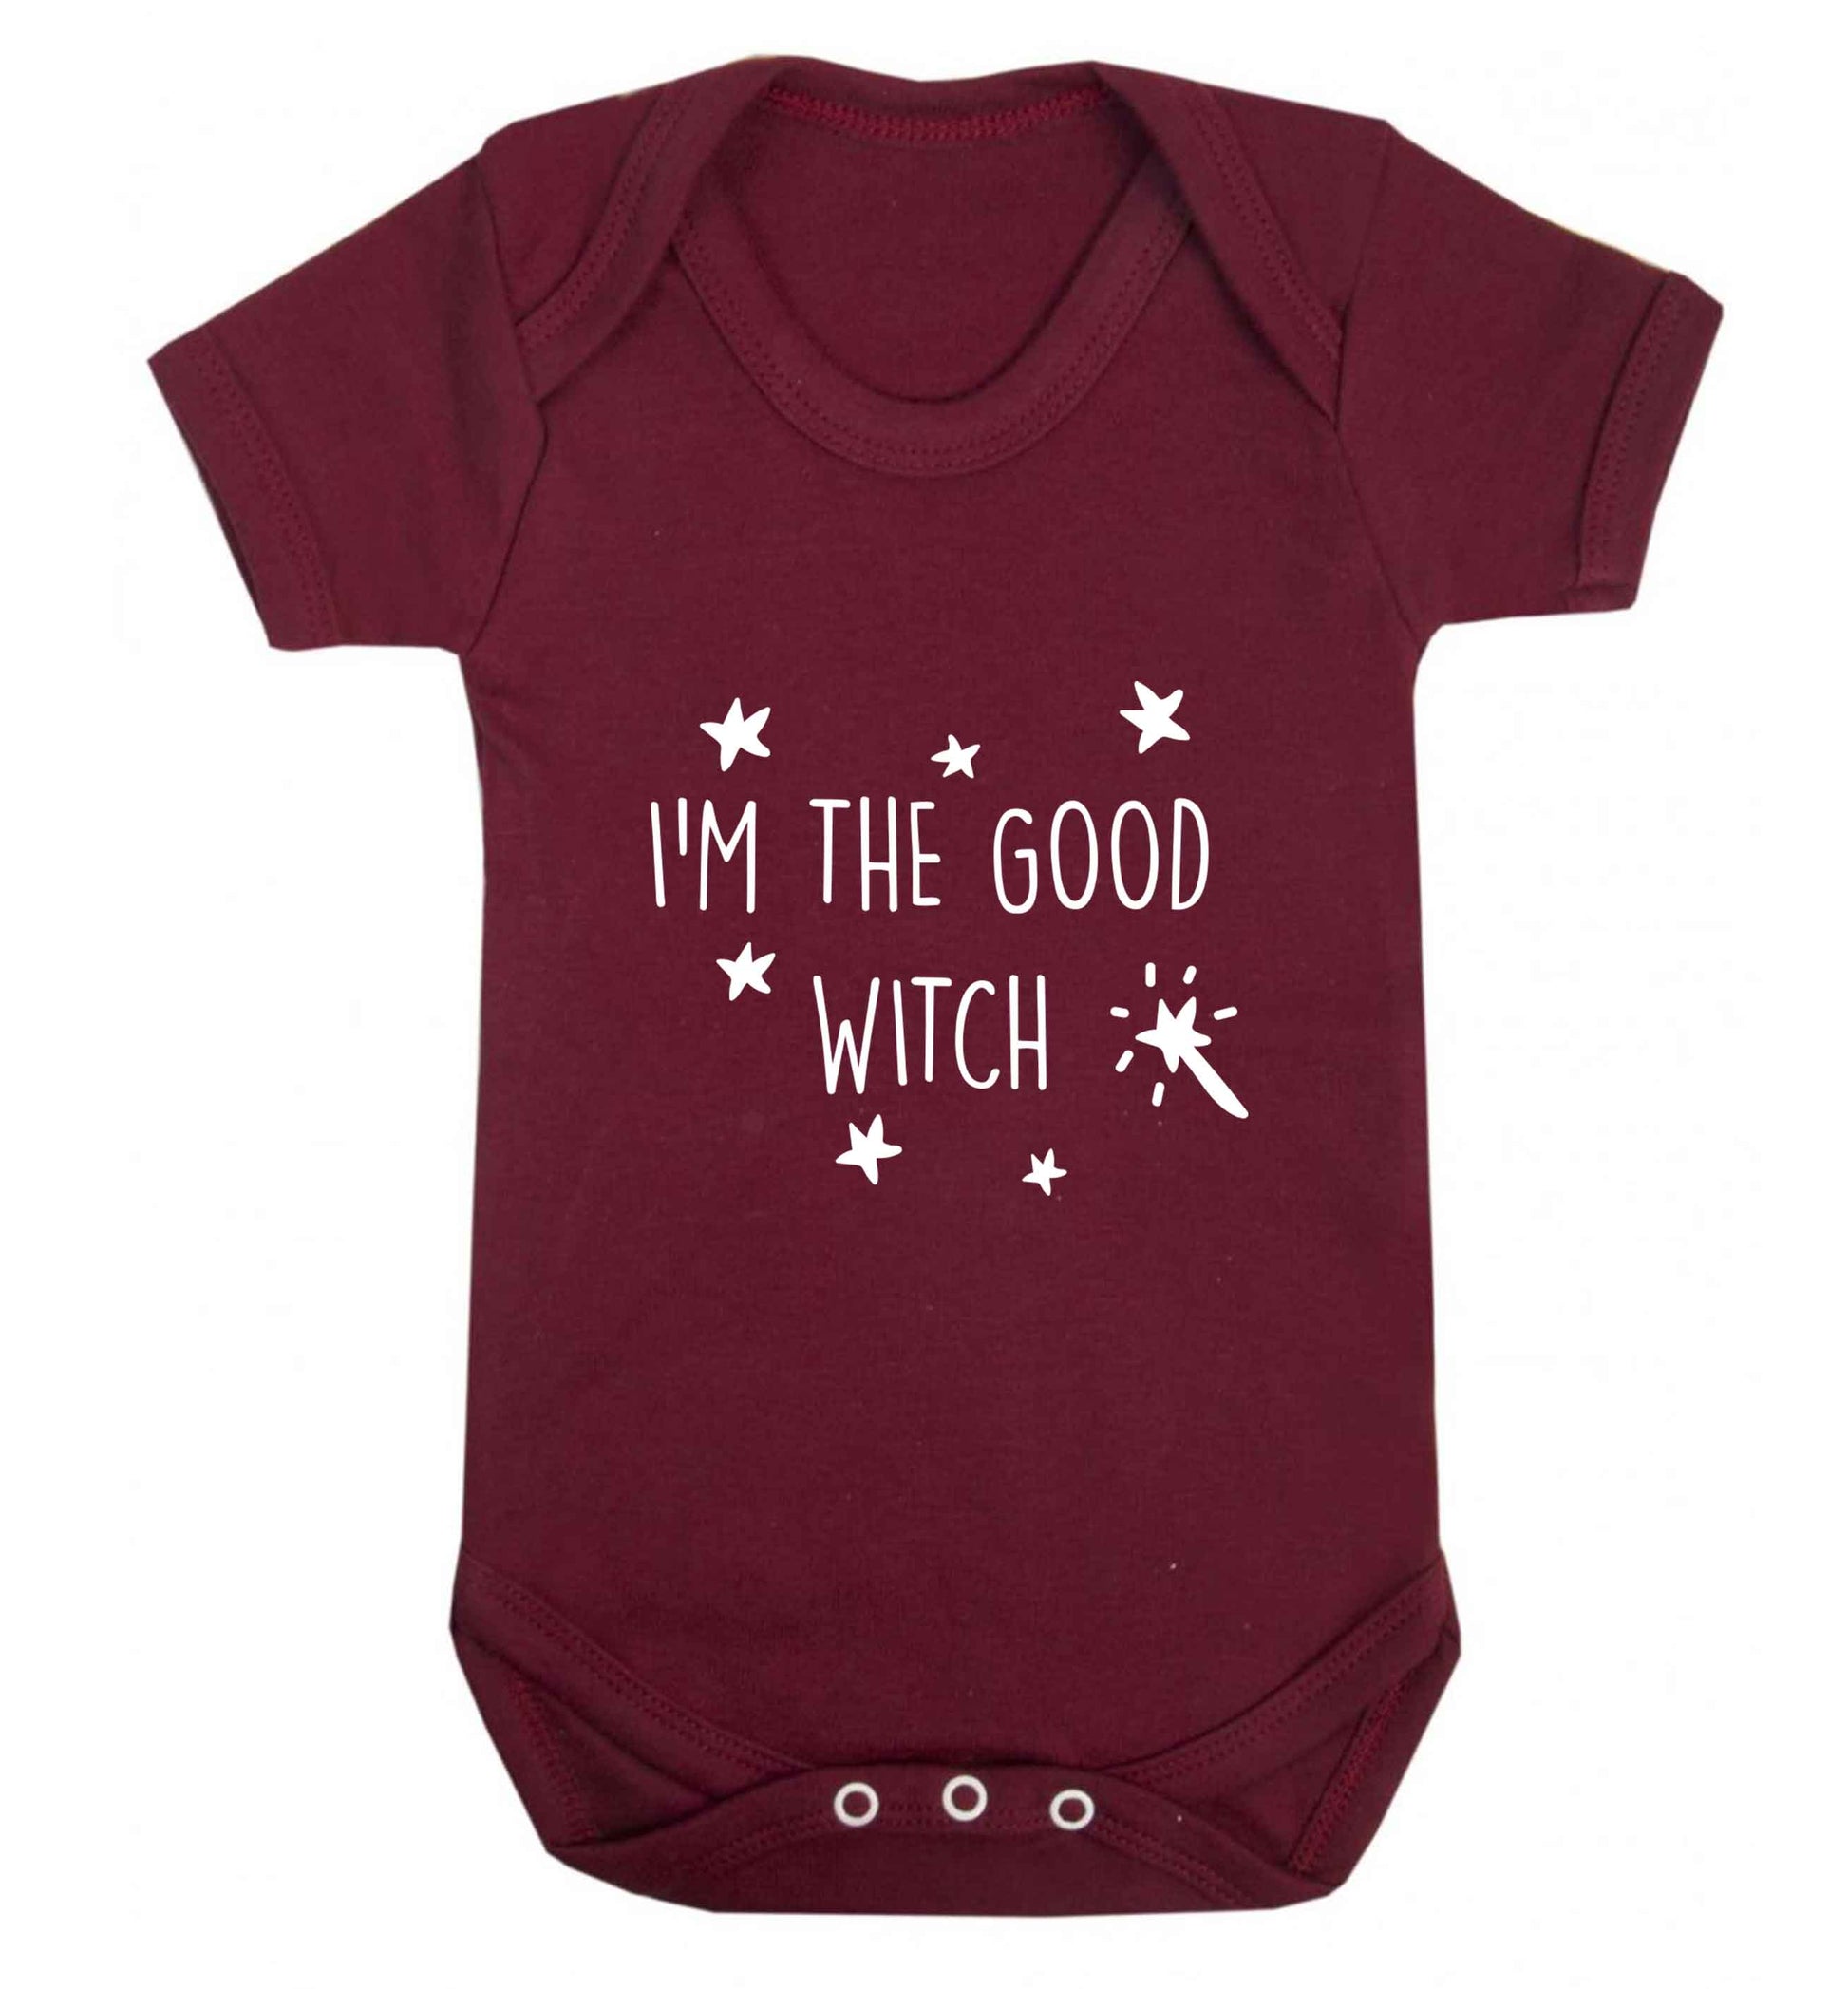 Good witch baby vest maroon 18-24 months